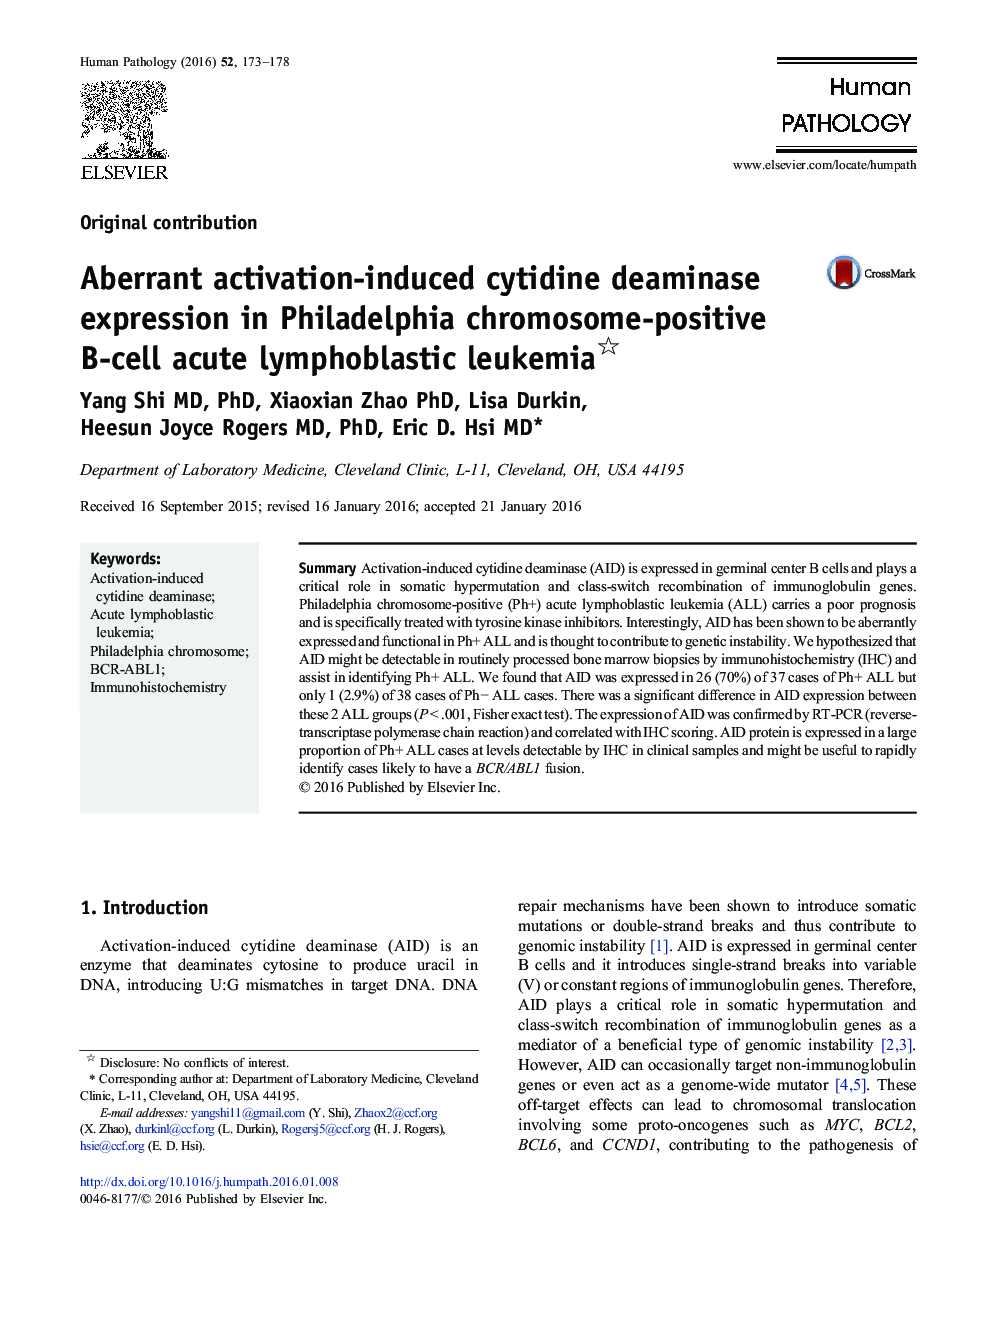 Aberrant activation-induced cytidine deaminase expression in Philadelphia chromosome-positive B-cell acute lymphoblastic leukemia